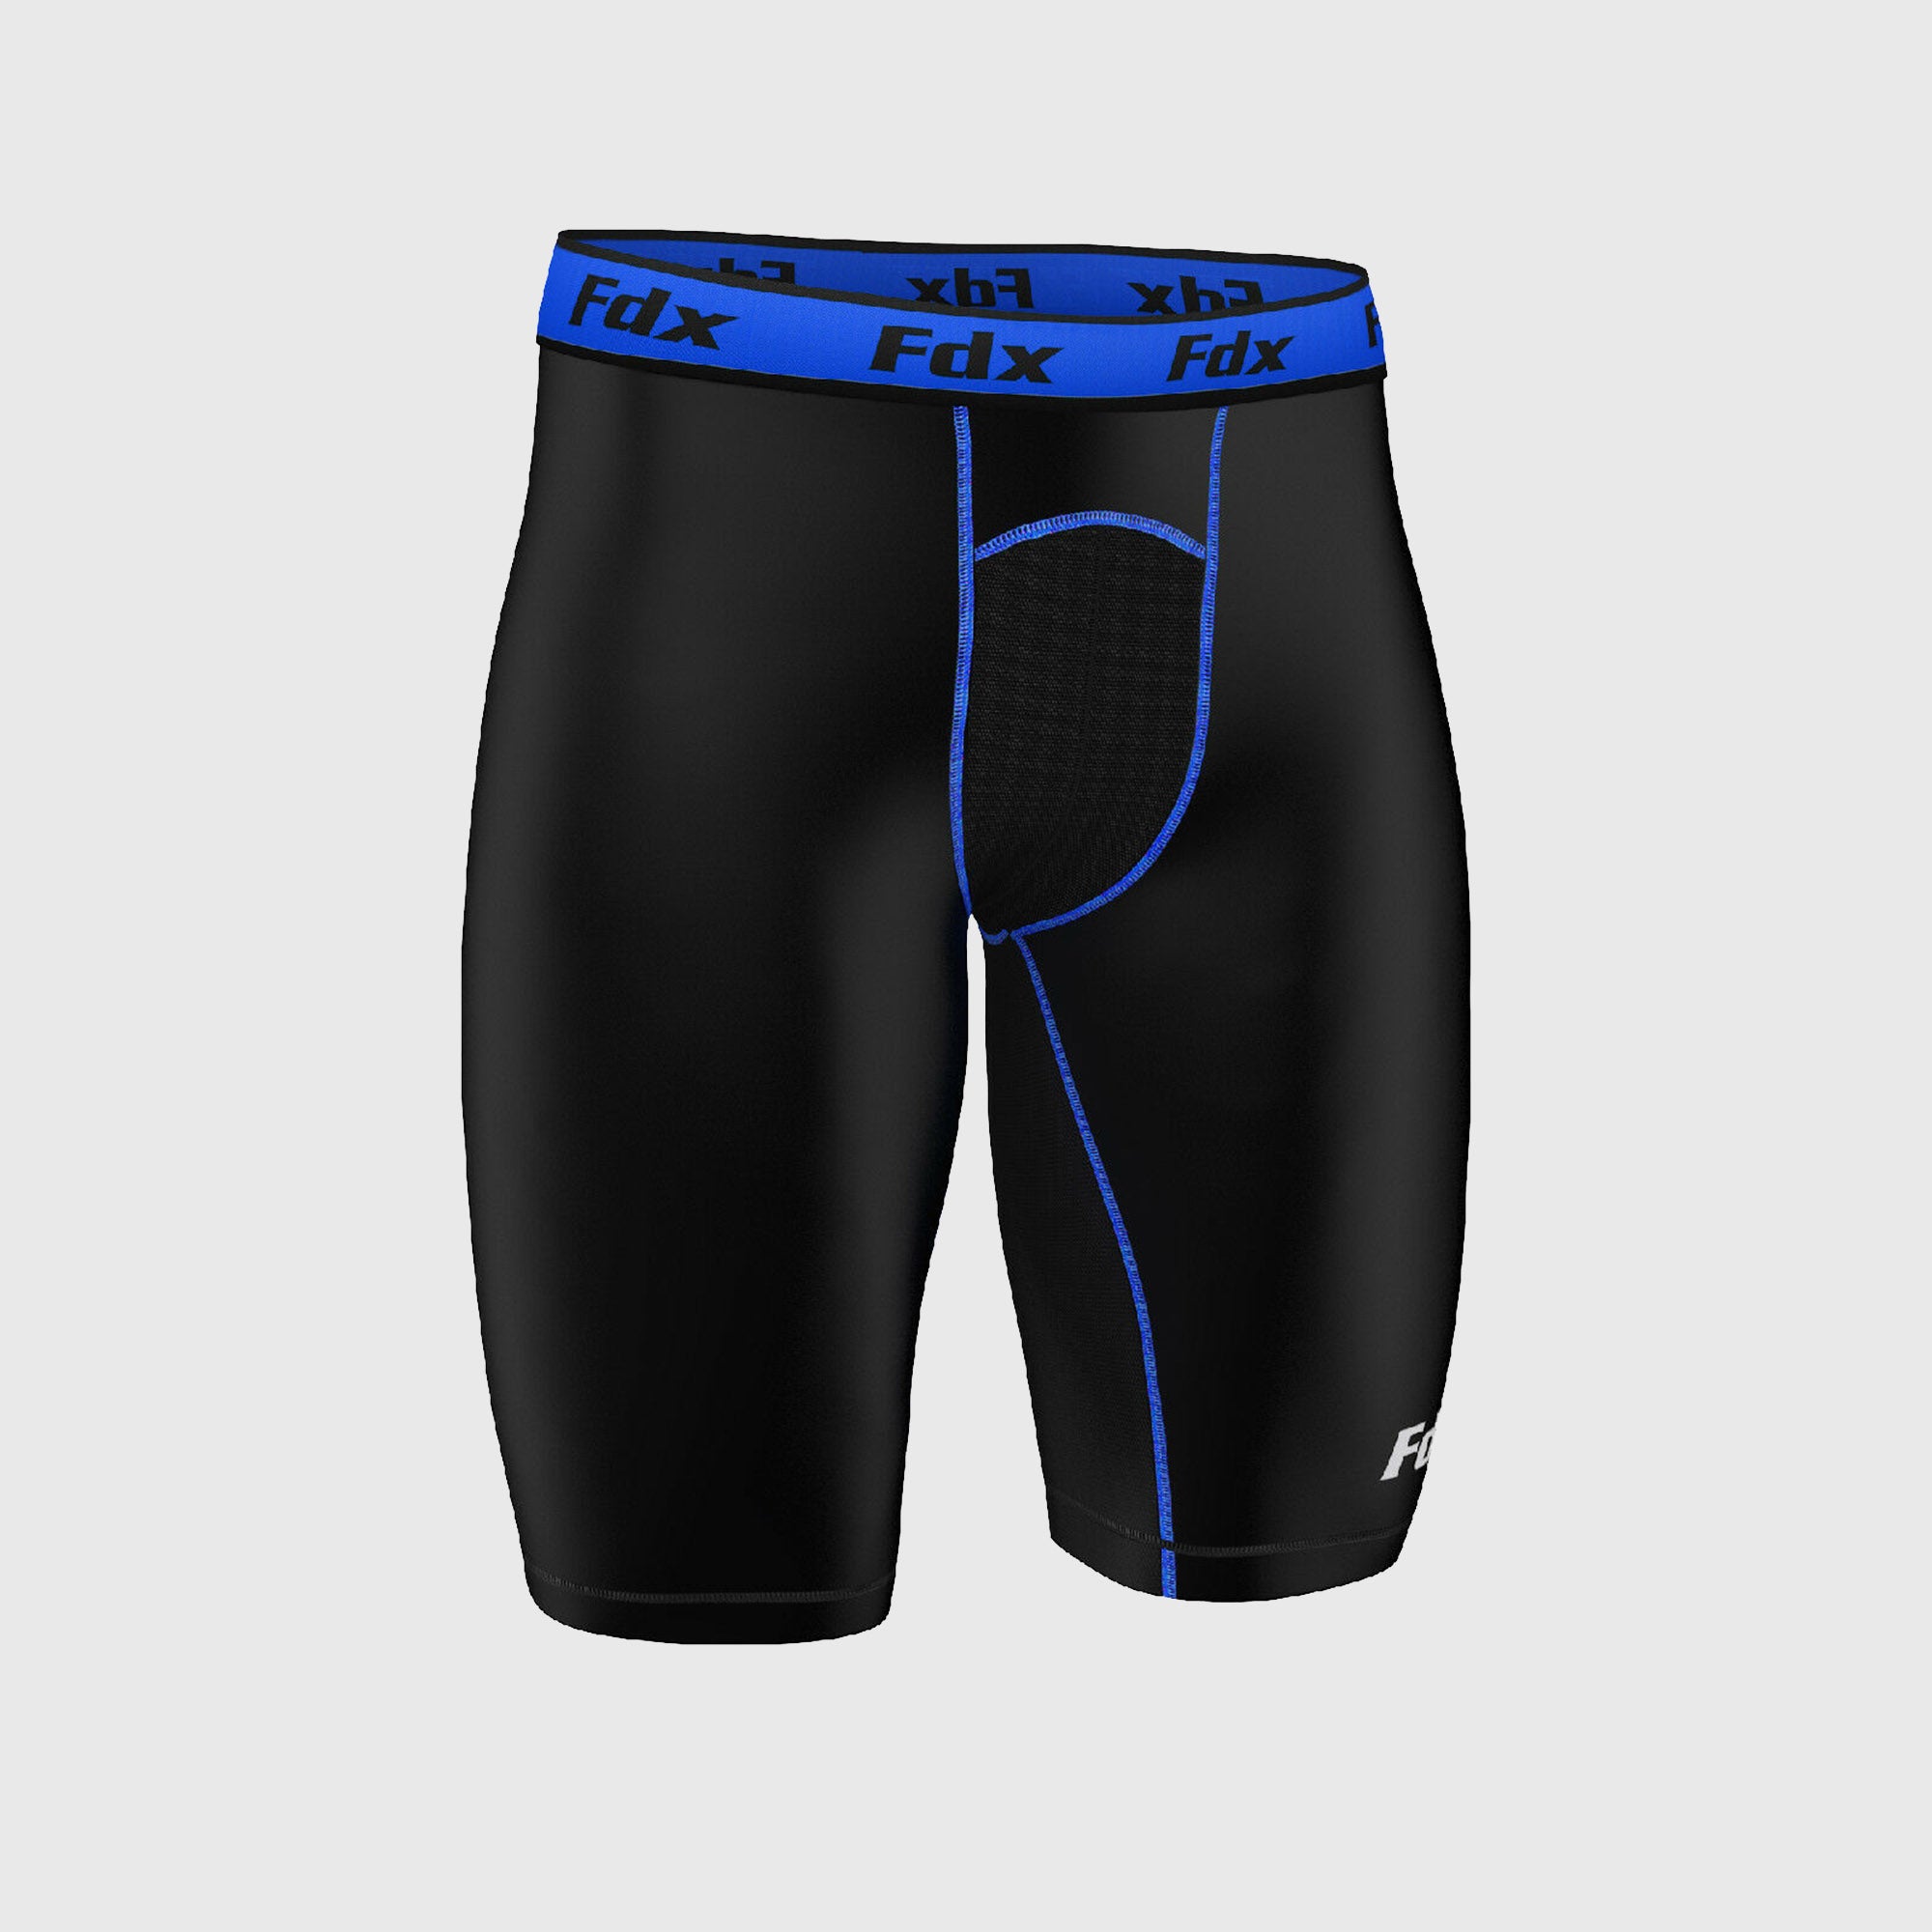 Fdx Men's BaseMax Blue Compression Shorts Skin Tight Gym Pants